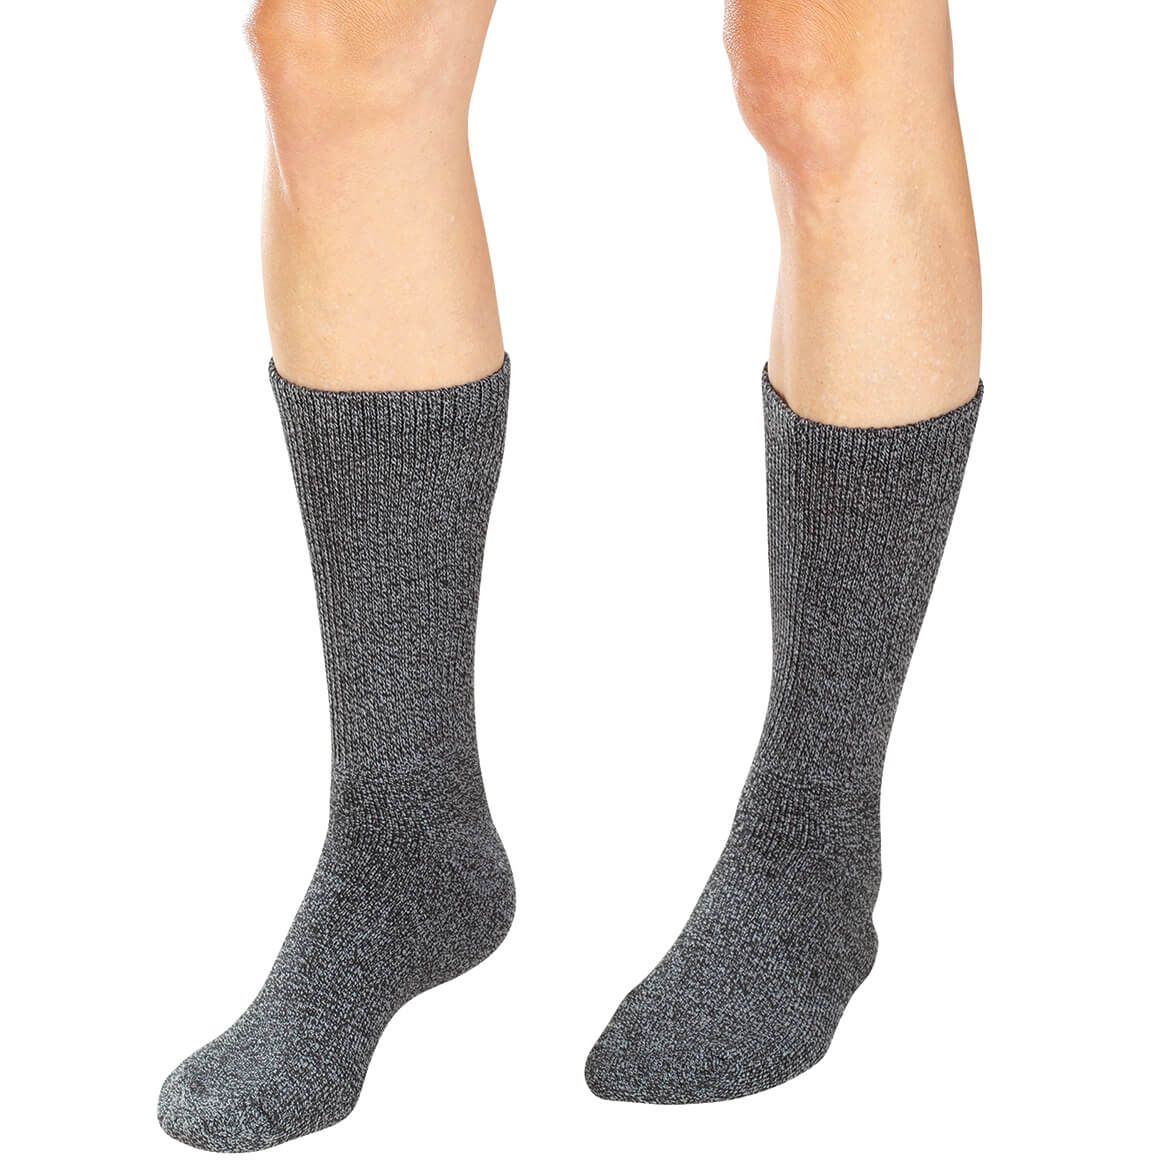 Silver Steps Twisted Yarn Cozy Diabetic Socks, 2 Pair - Miles Kimball